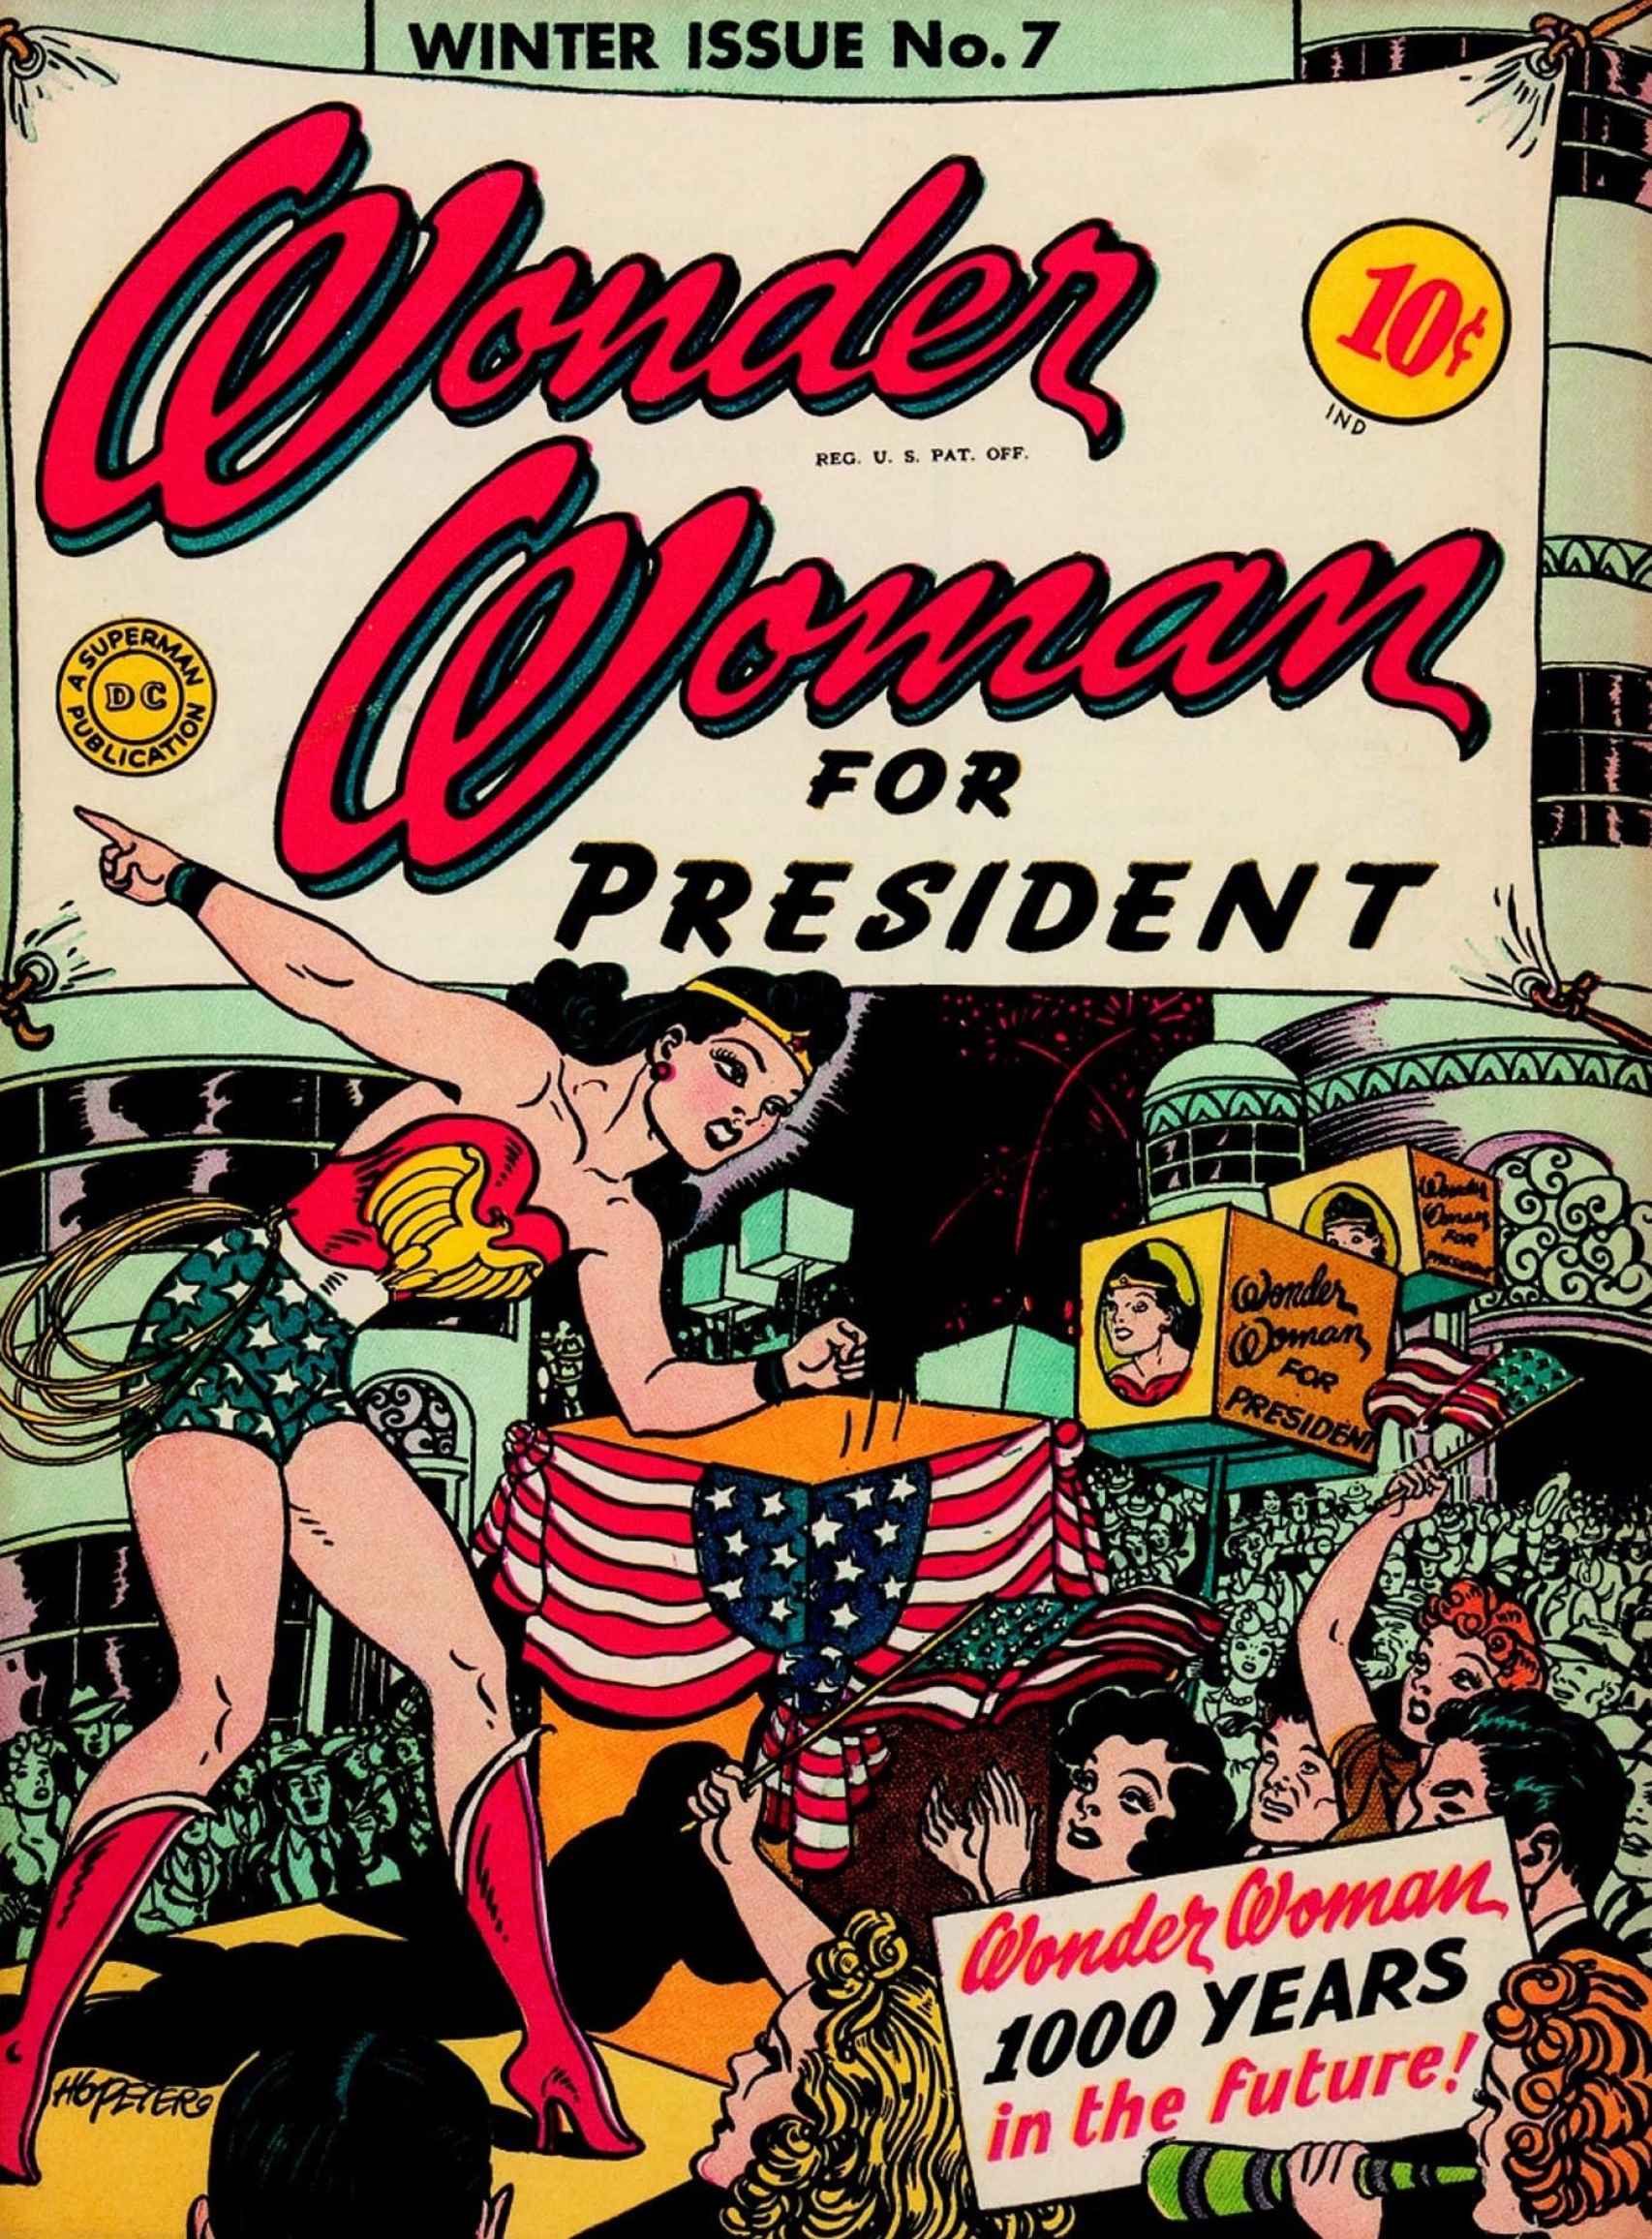 Wonder Woman for President (diciembre 1943).